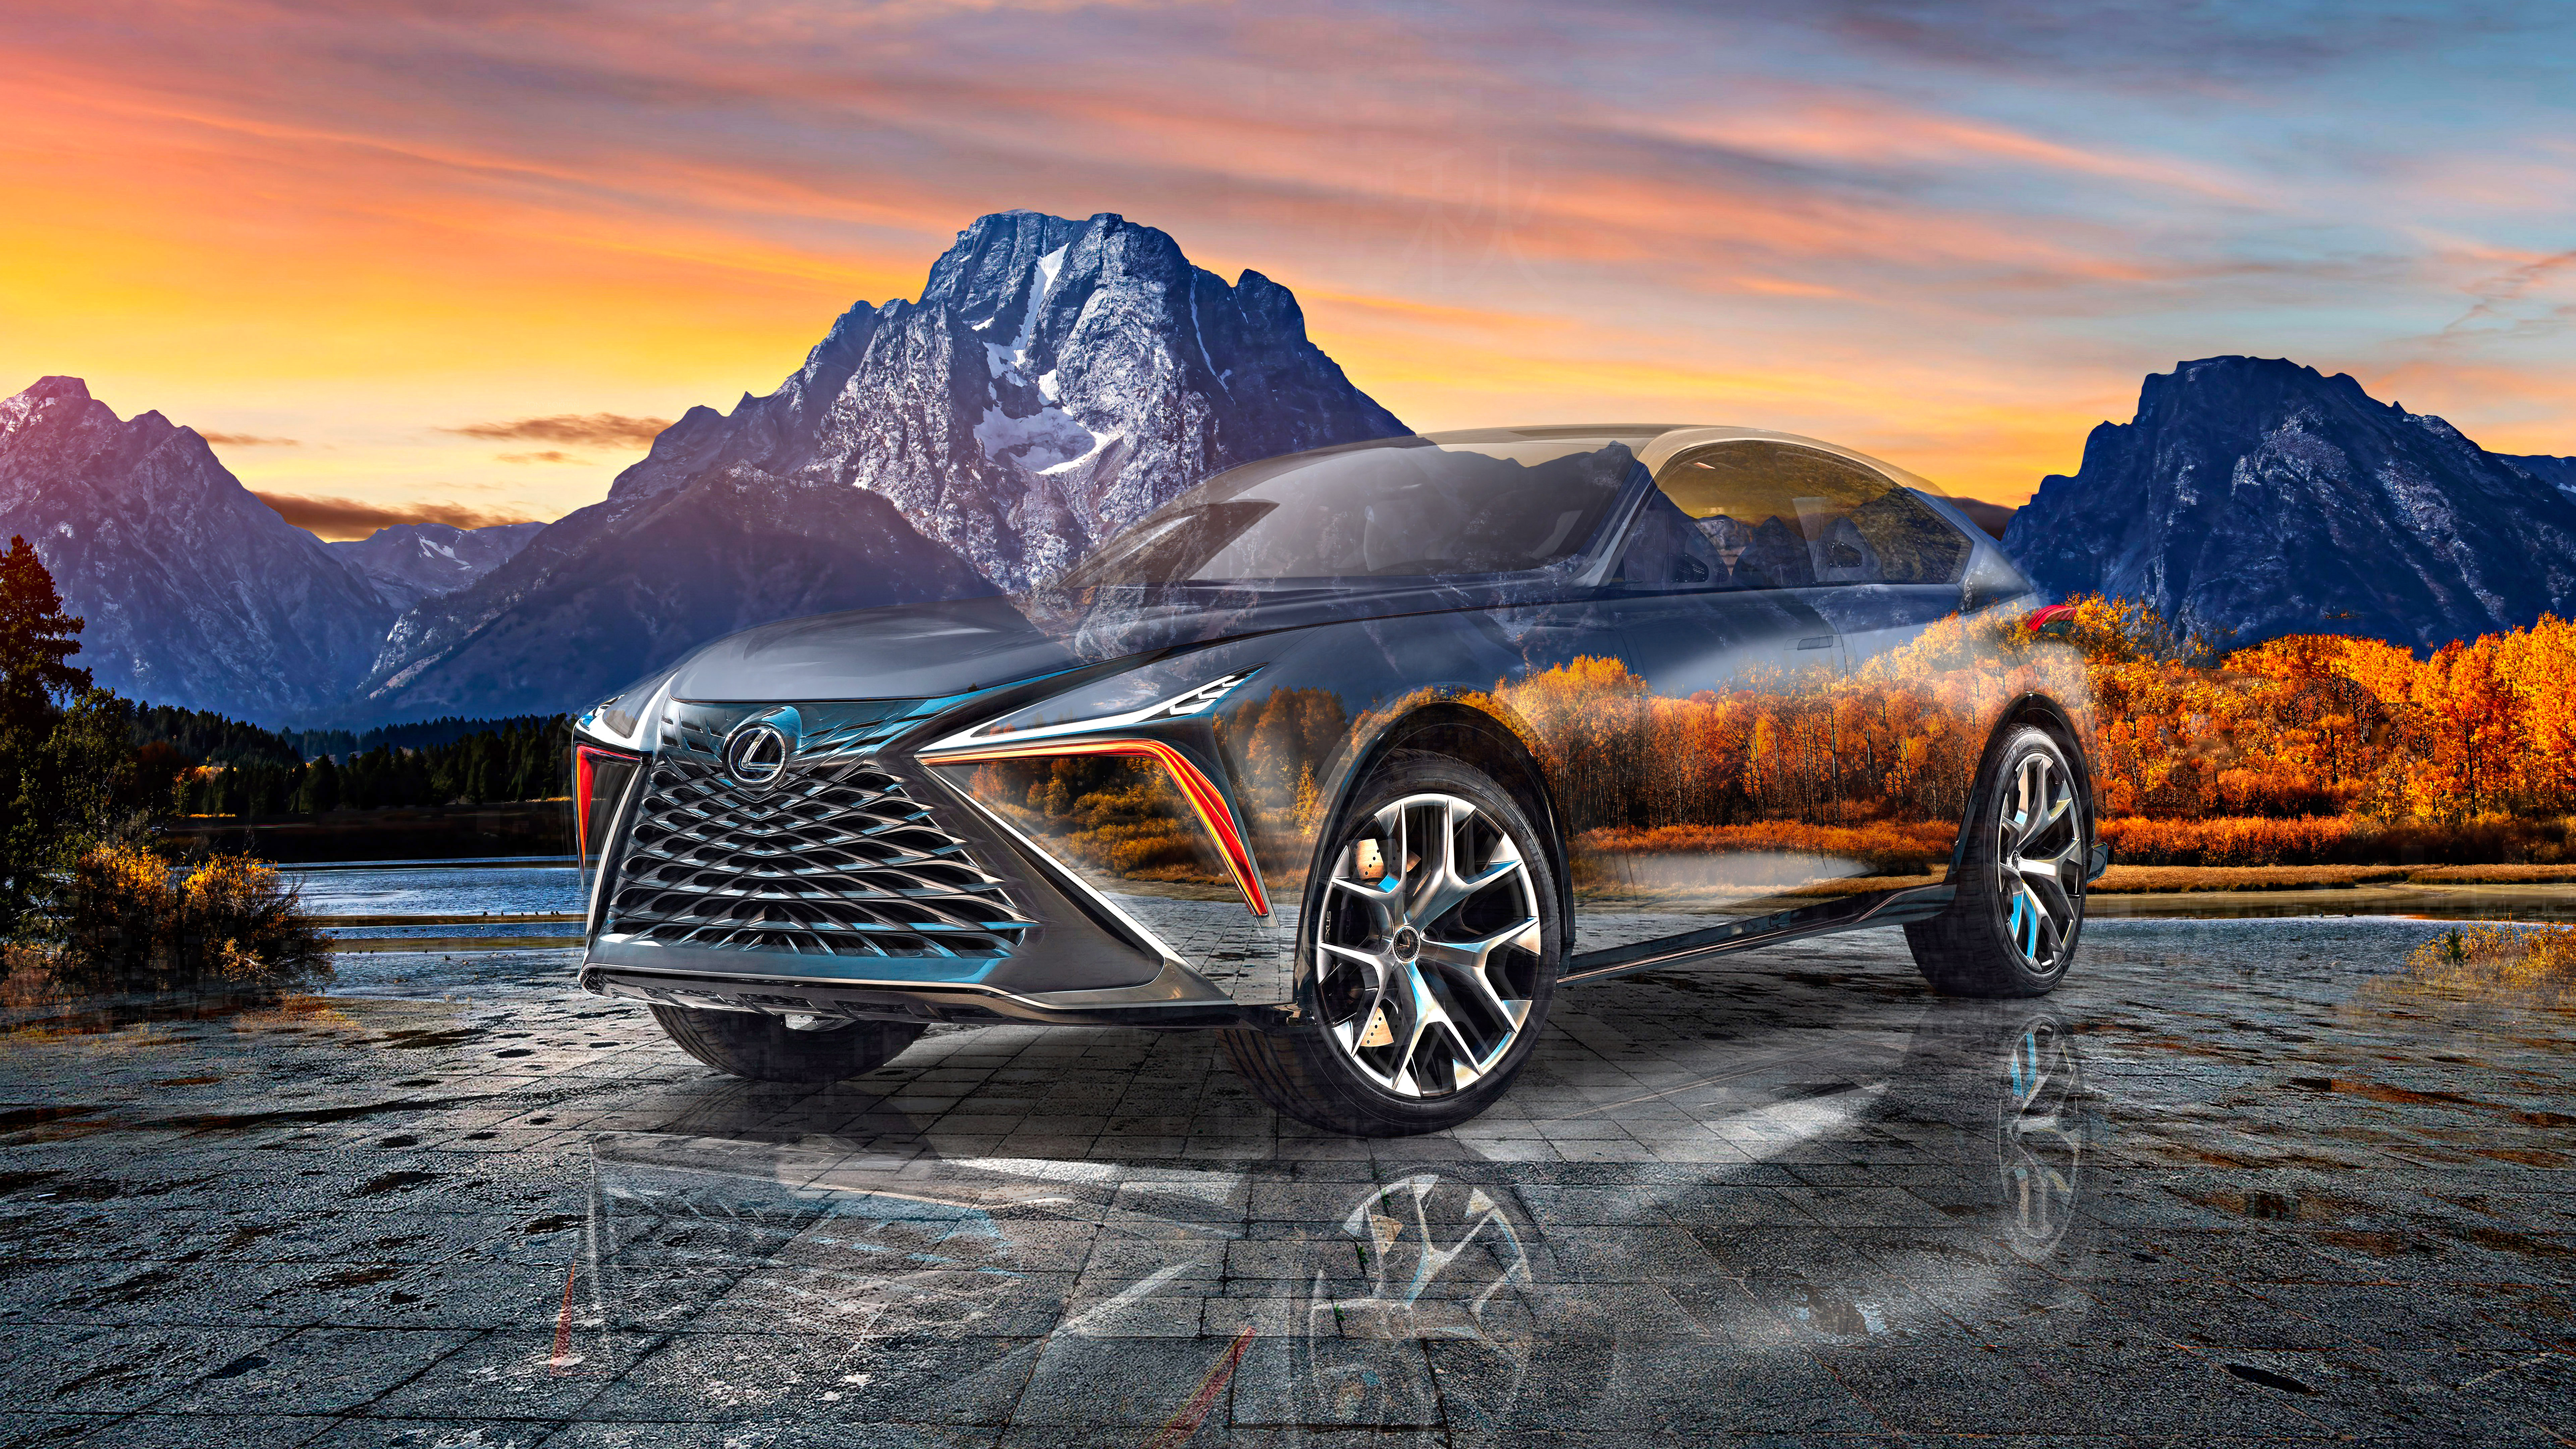 Lexus-LF-1-Limitless-Super-Crystal-Autumn-Soul-Grand-Teton-National-Park-USA-Nature-Art-Car